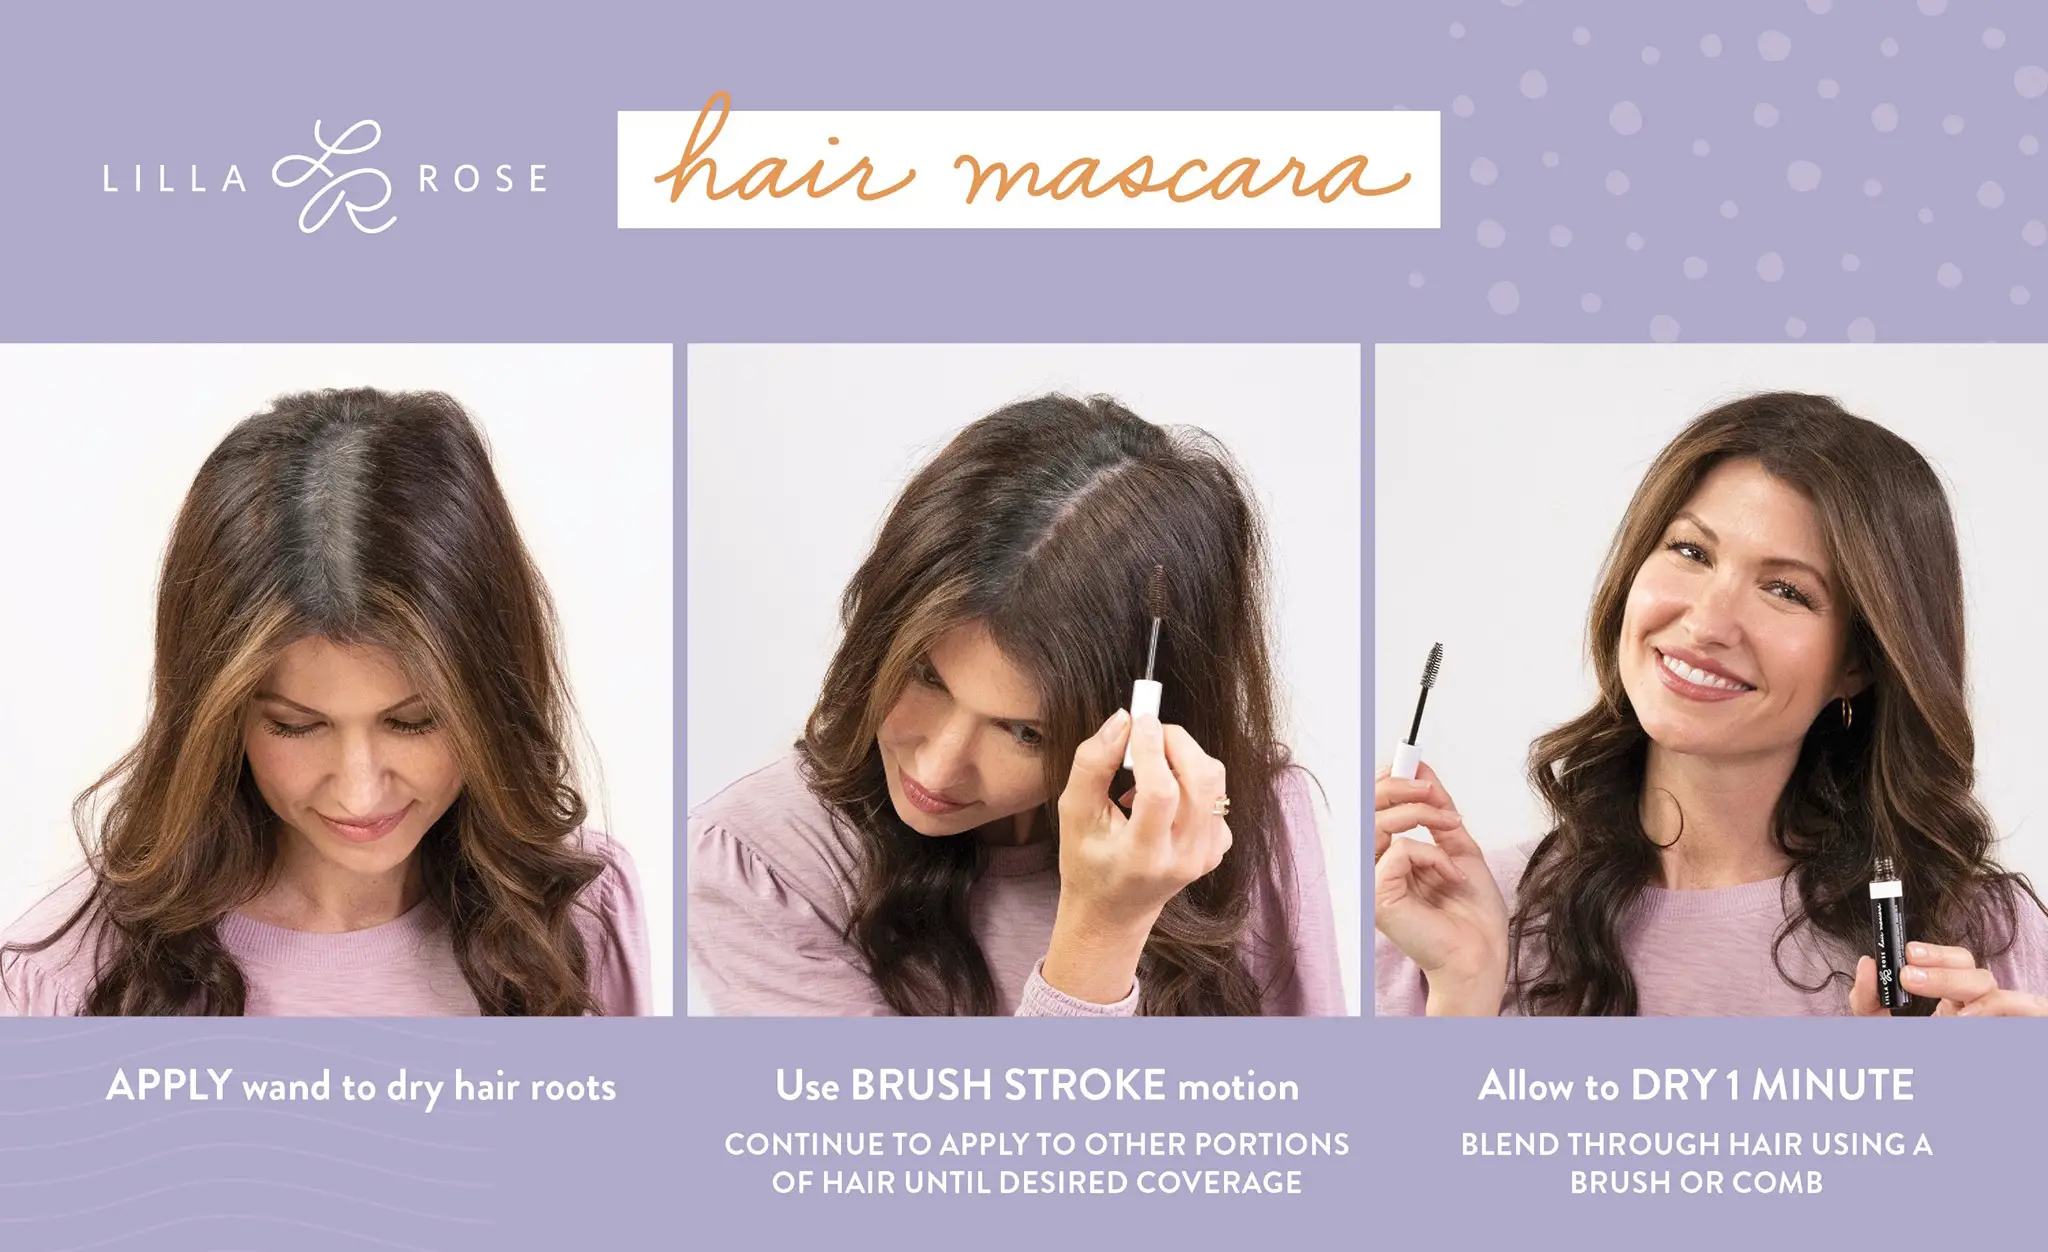 how to use hair mascara